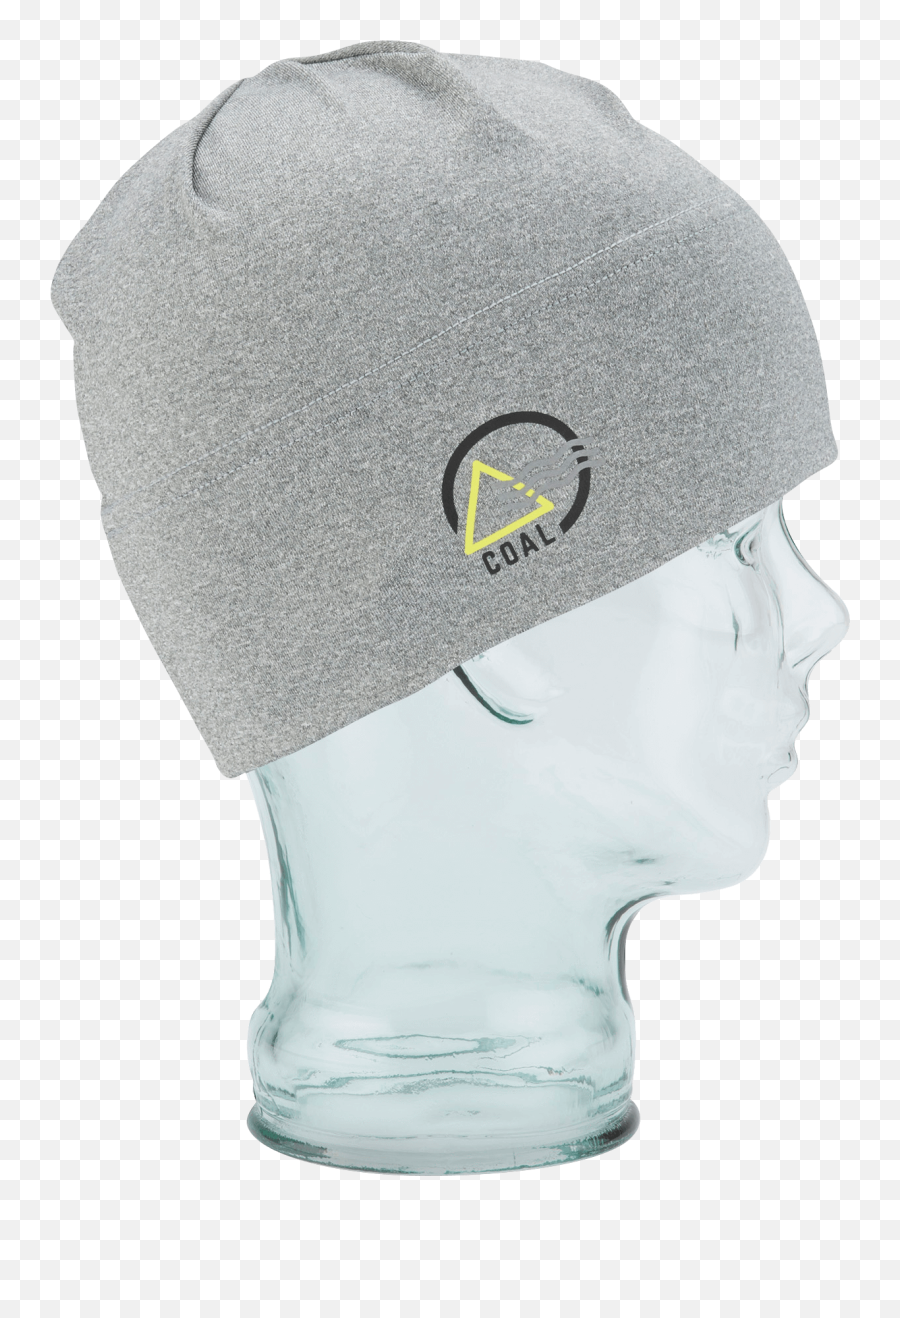 Download Coal The Swift Beanie Grey - Hat Full Size Png Headband Ski,Coal Png